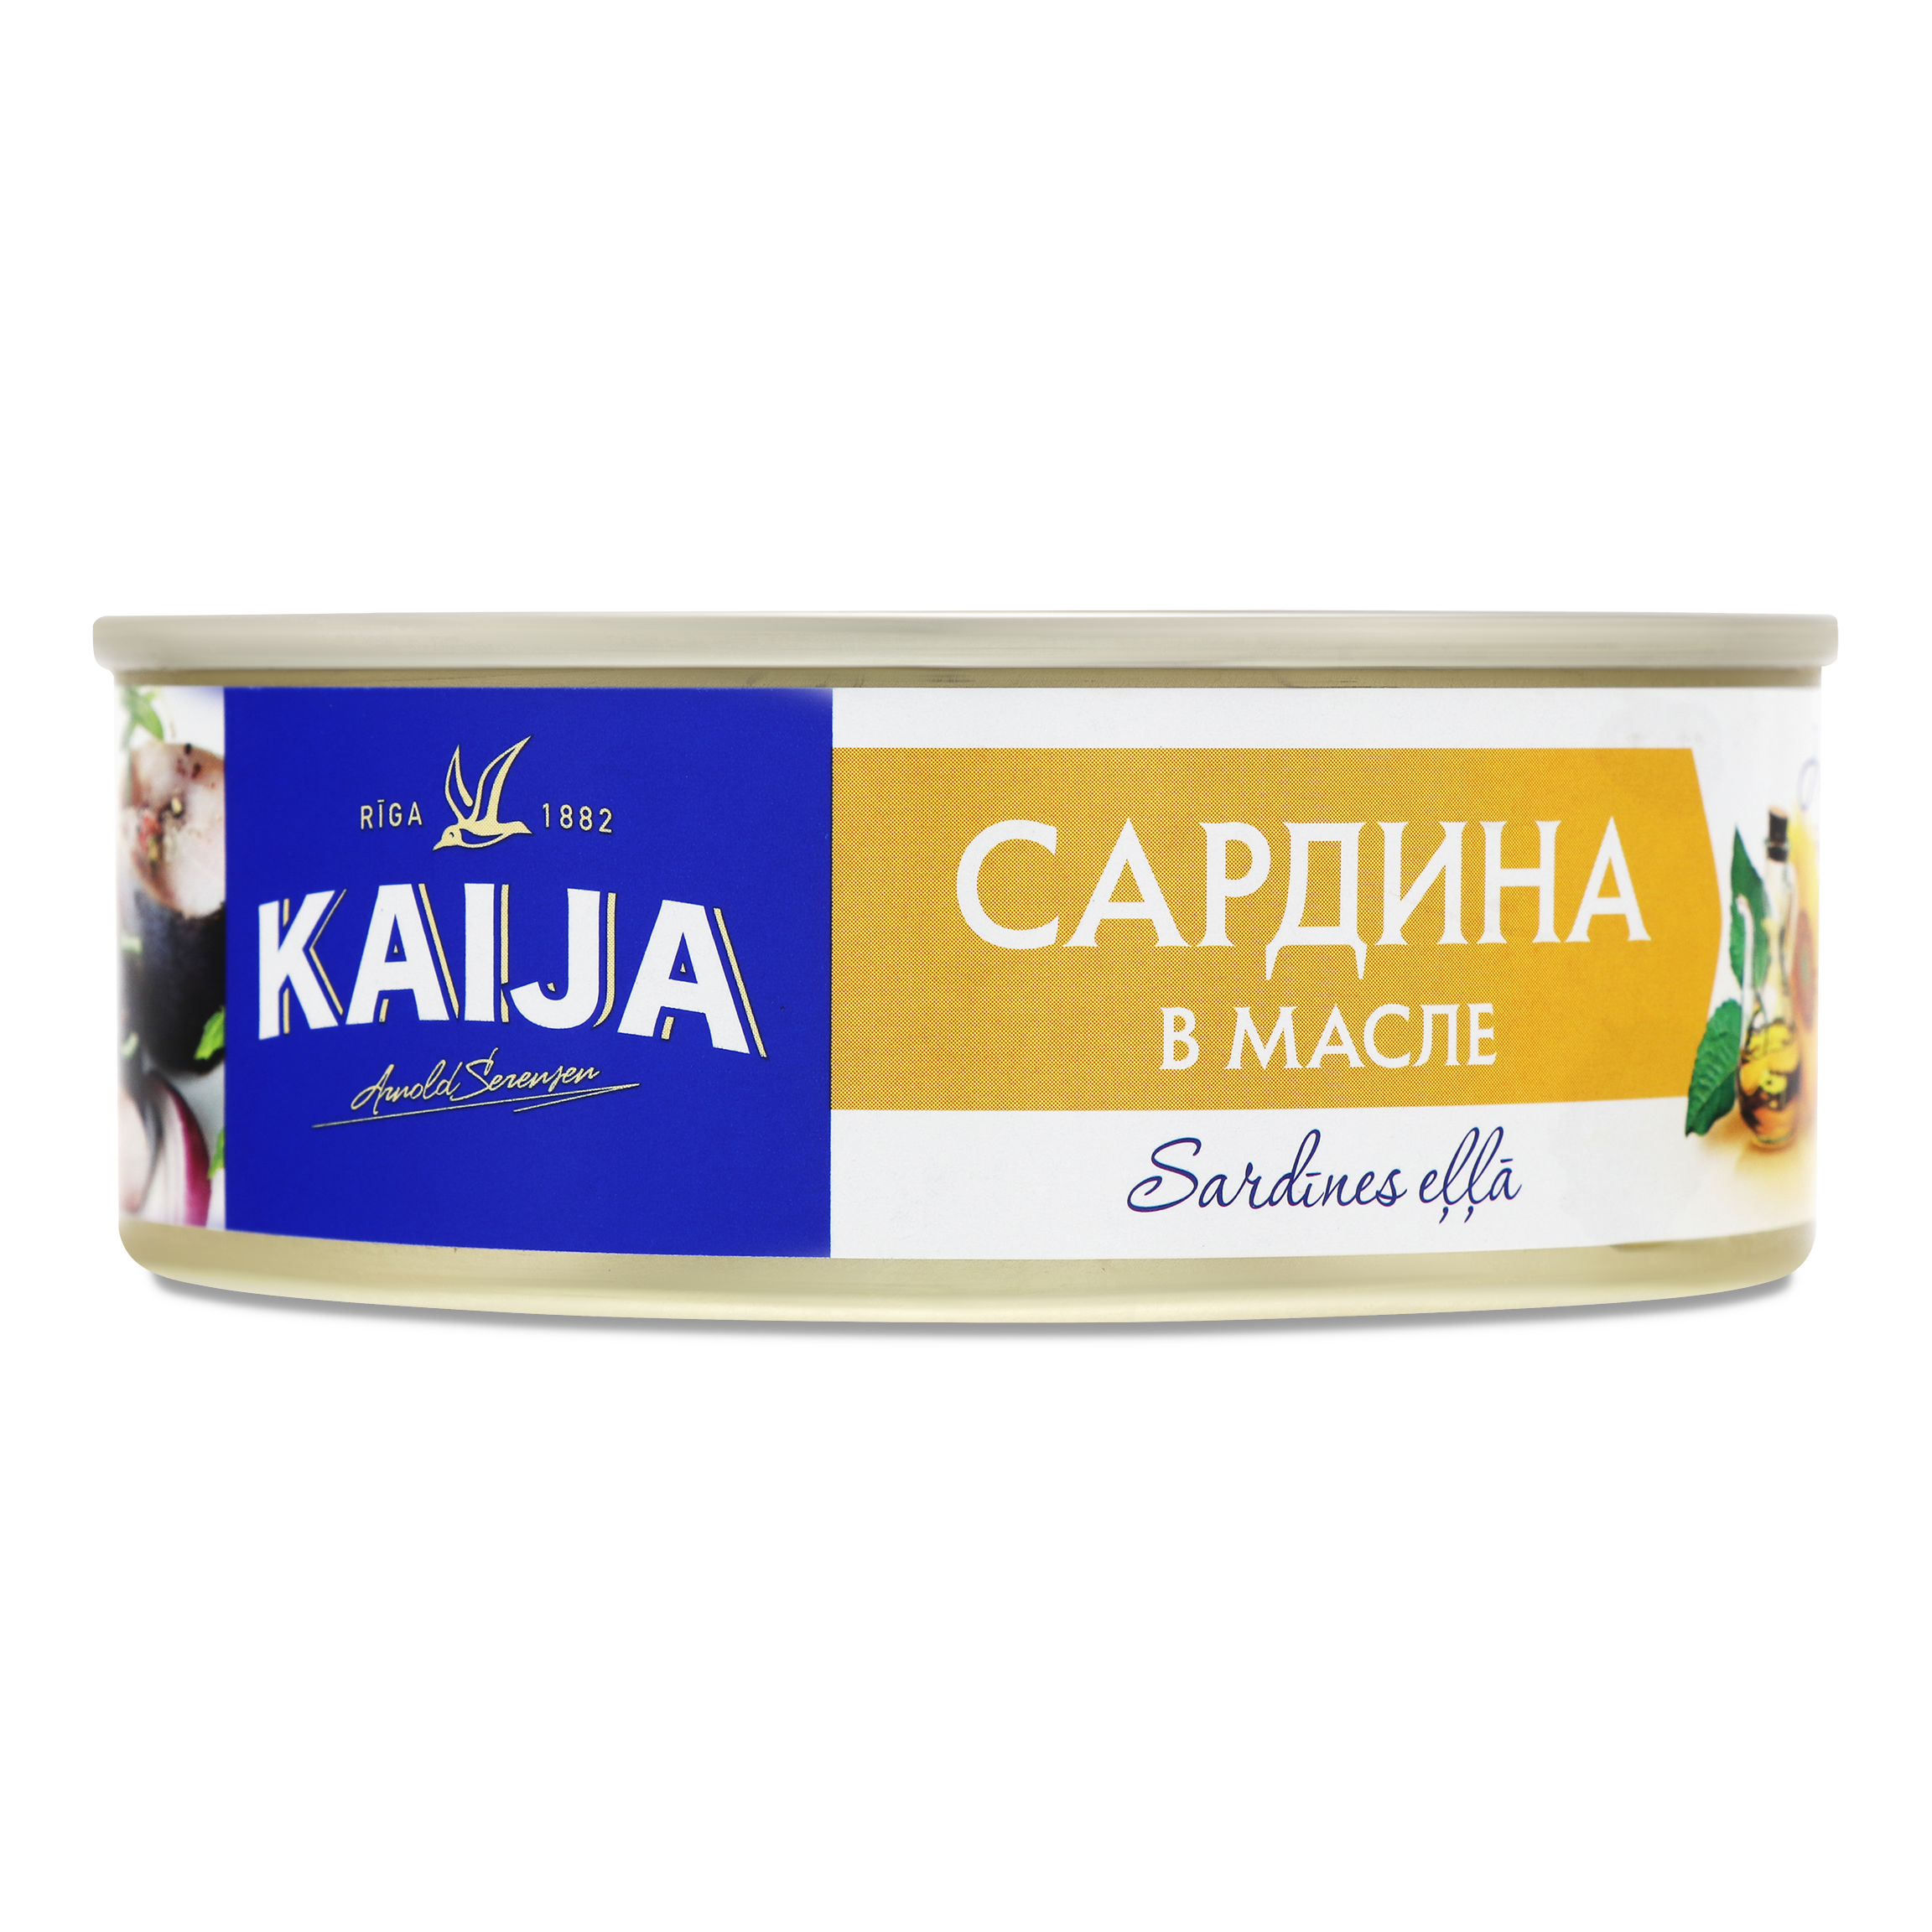 Kaija in oil fish sardines 240g